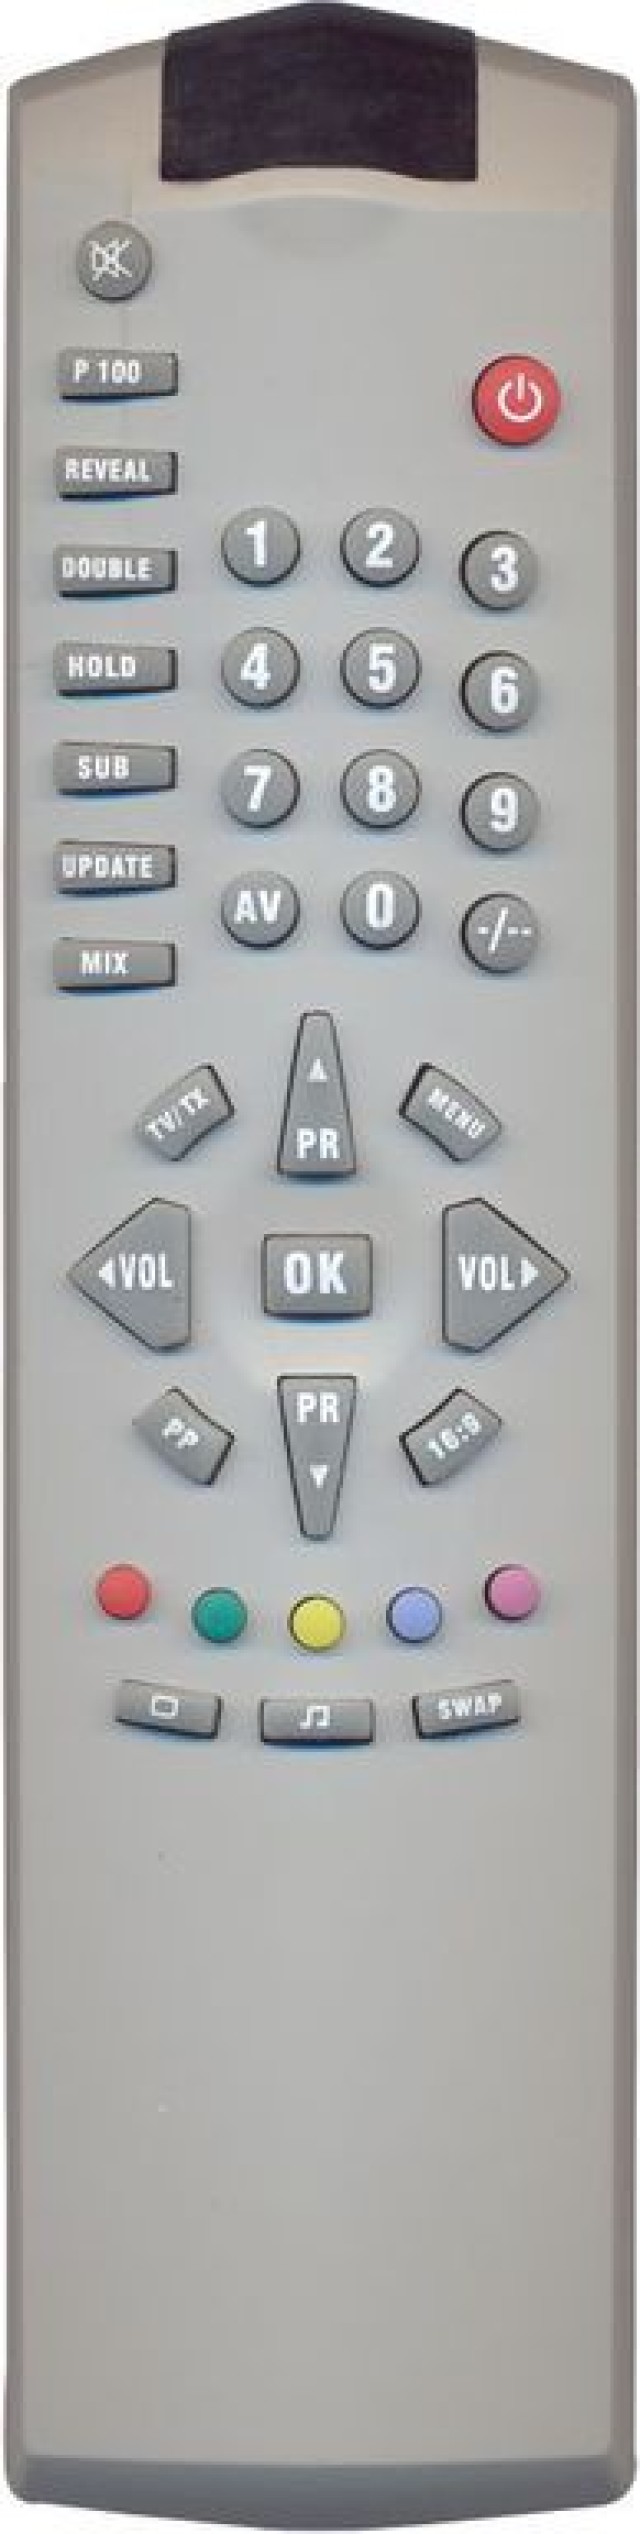 OEM, 0104, PRINCESS compatible remote control